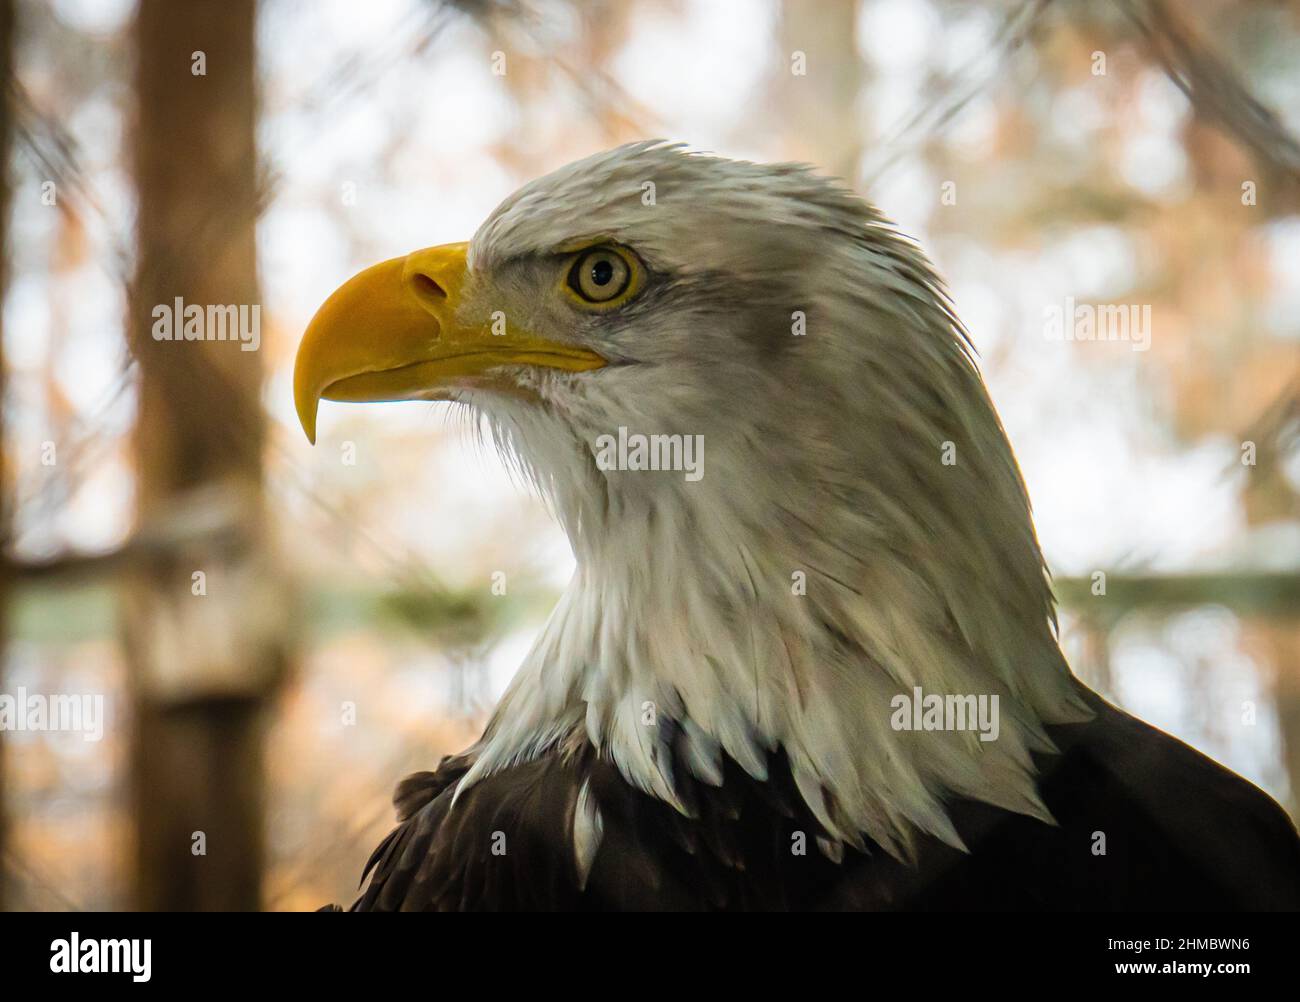 cabeza regal de un águila calva americana con pico prominente Foto de stock